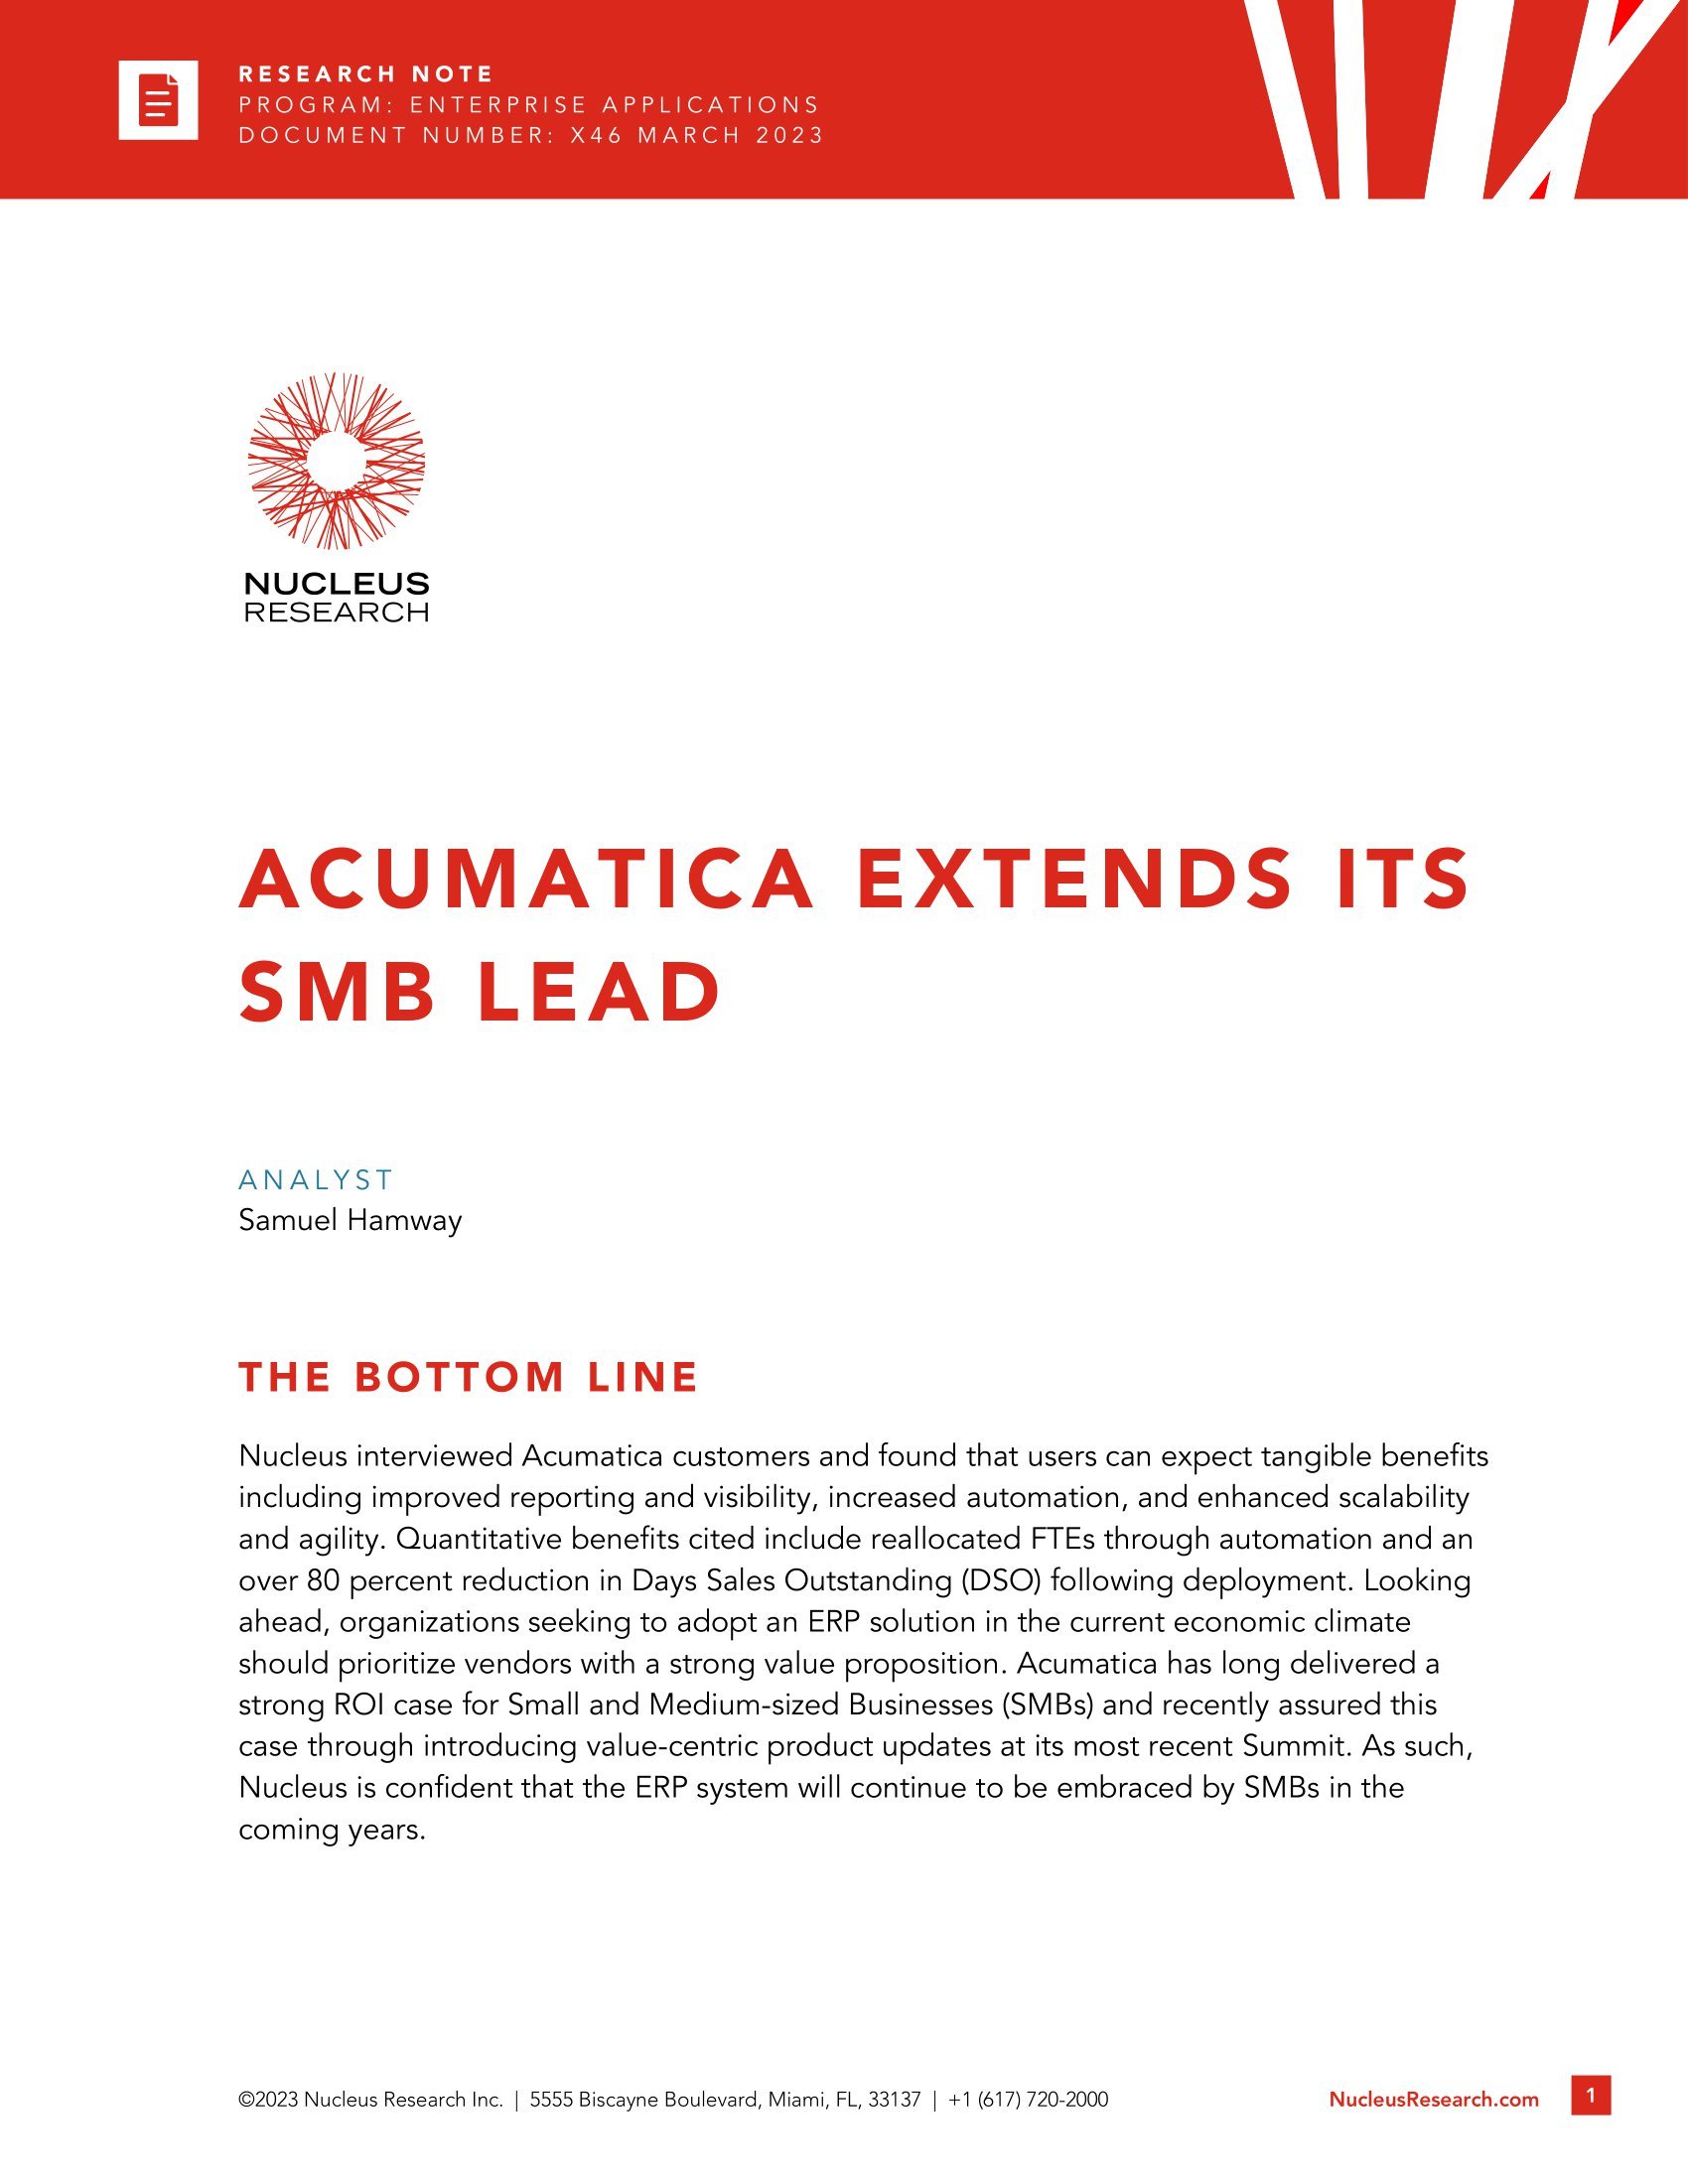 Acumatica Extends Its SMB Lead